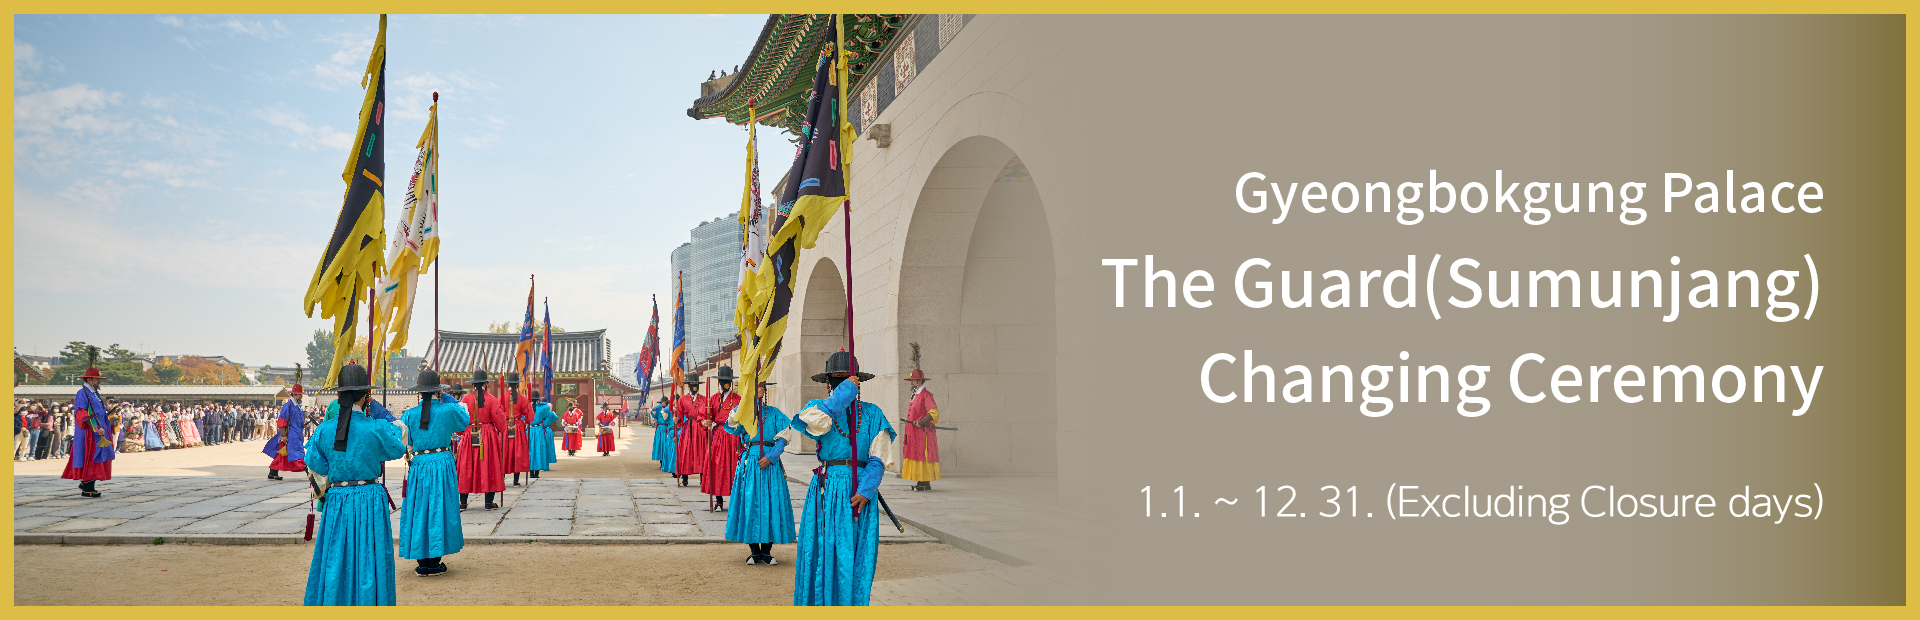 Gyeongbokgung Palace
The Guard(Sumunjang) Changing Ceremony
1.1. ~ 12. 31. (Excluding Closure days)